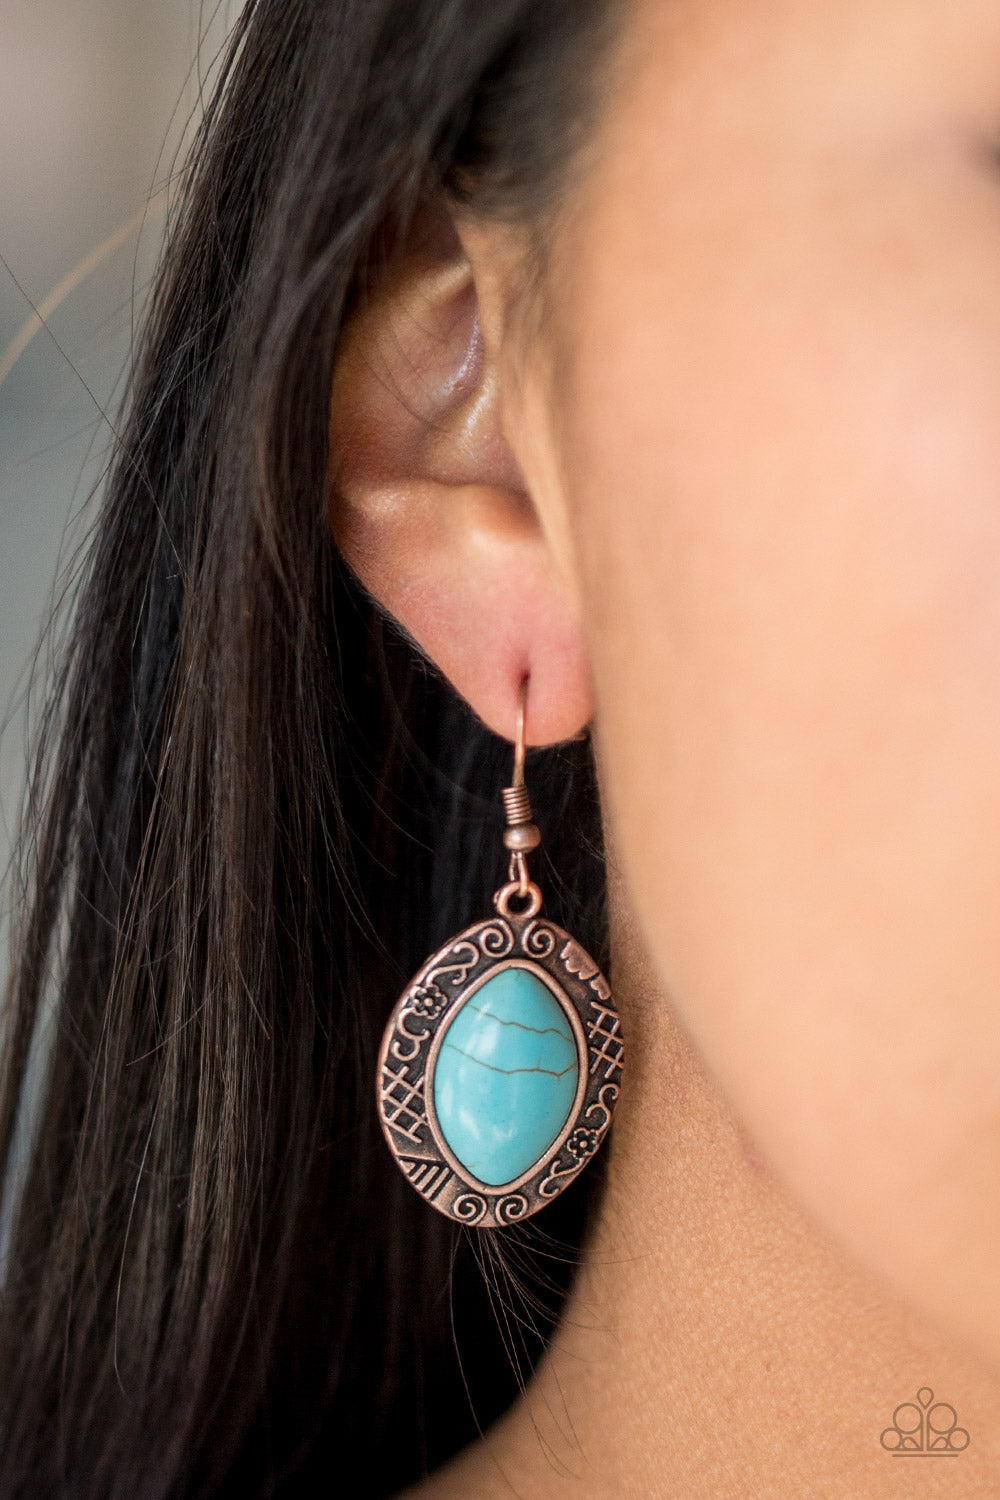 Aztec Horizons - Copper Earrings